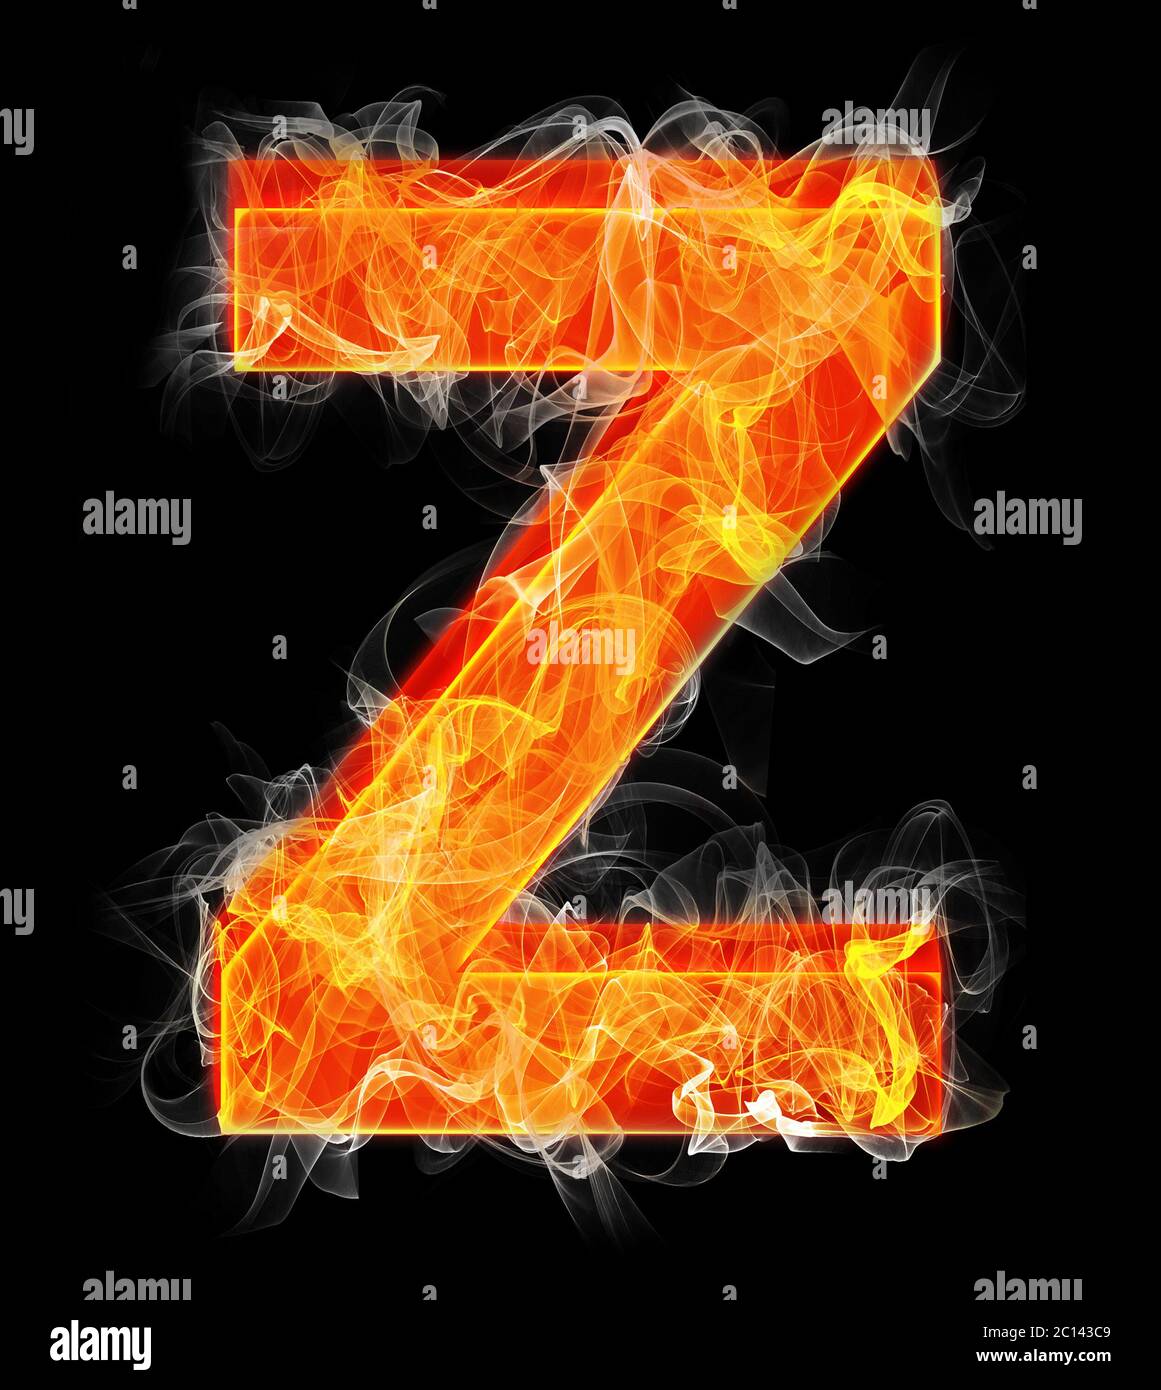 Burning letters as alphabet type Z Stock Photo - Alamy